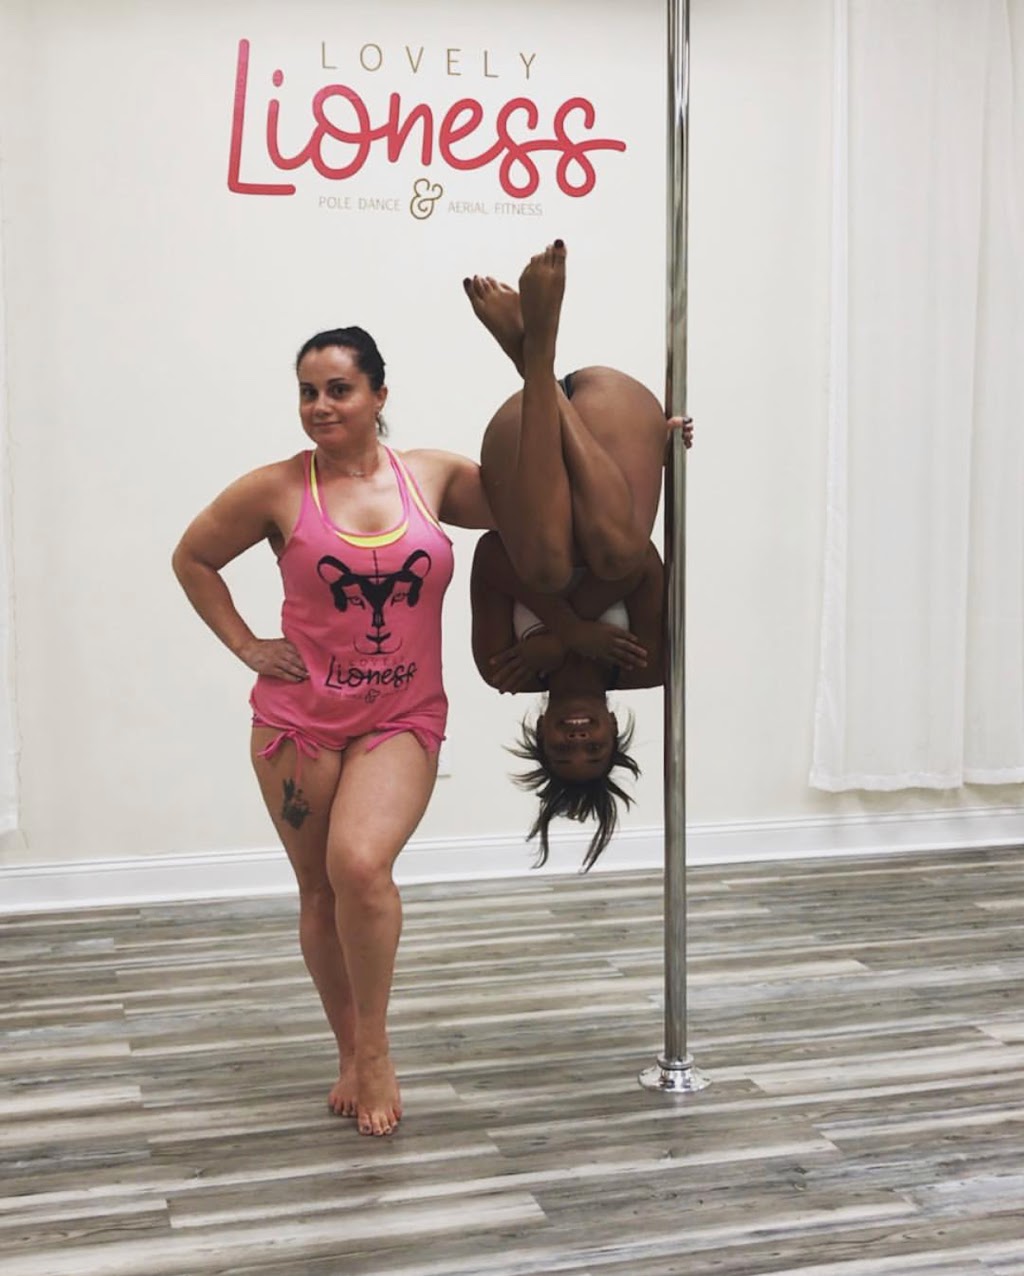 Lovely Lioness Pole Dance & Aerial Fitness | 86 Morris Ave, Neptune City, NJ 07753 | Phone: (800) 336-1928